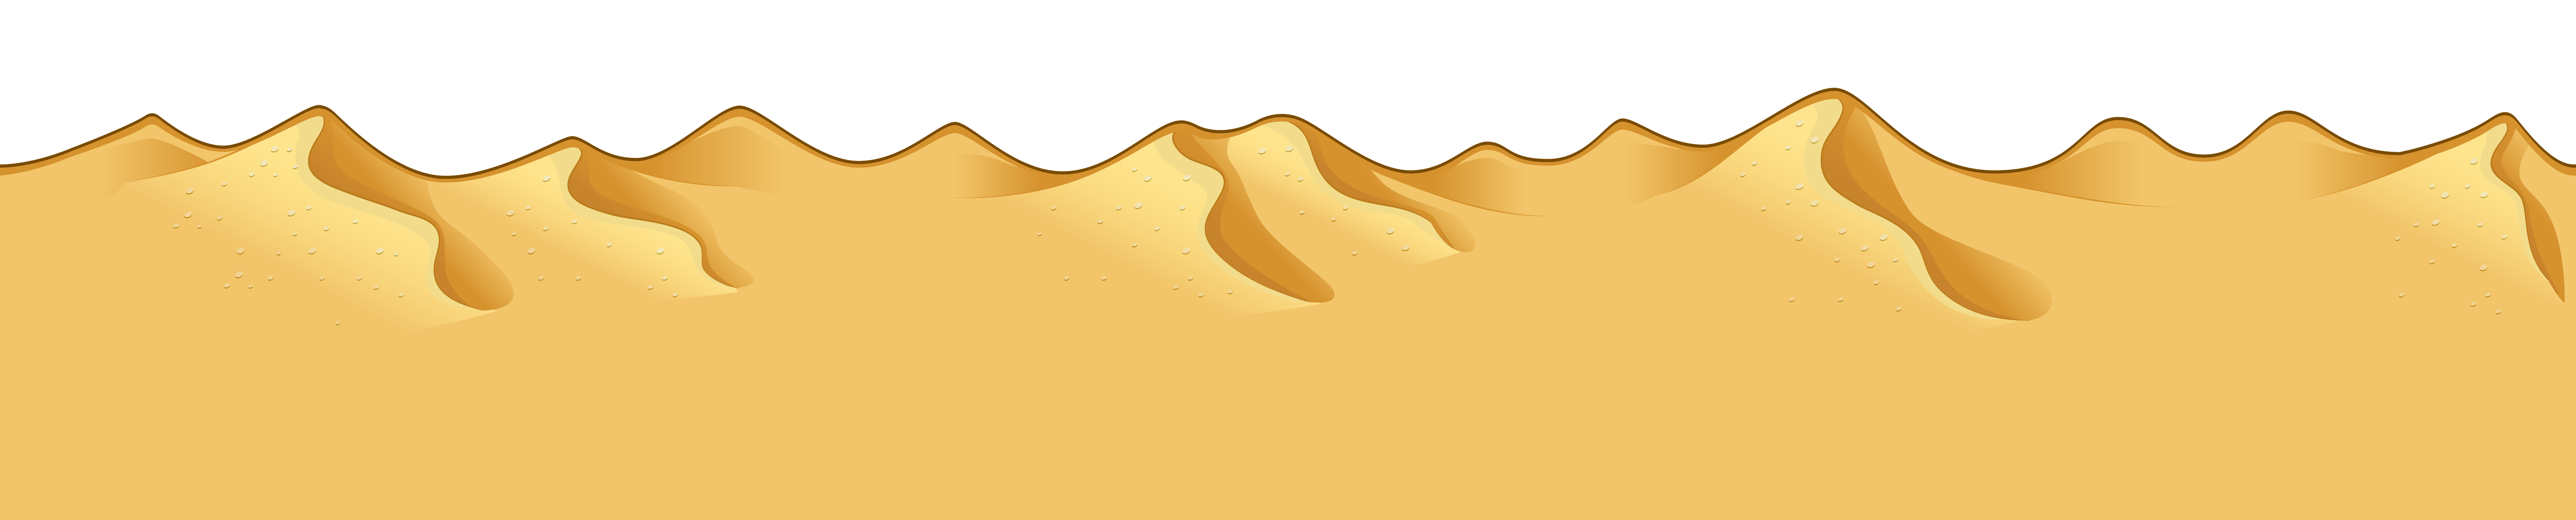 Desert Sand Transparent Isolated Background